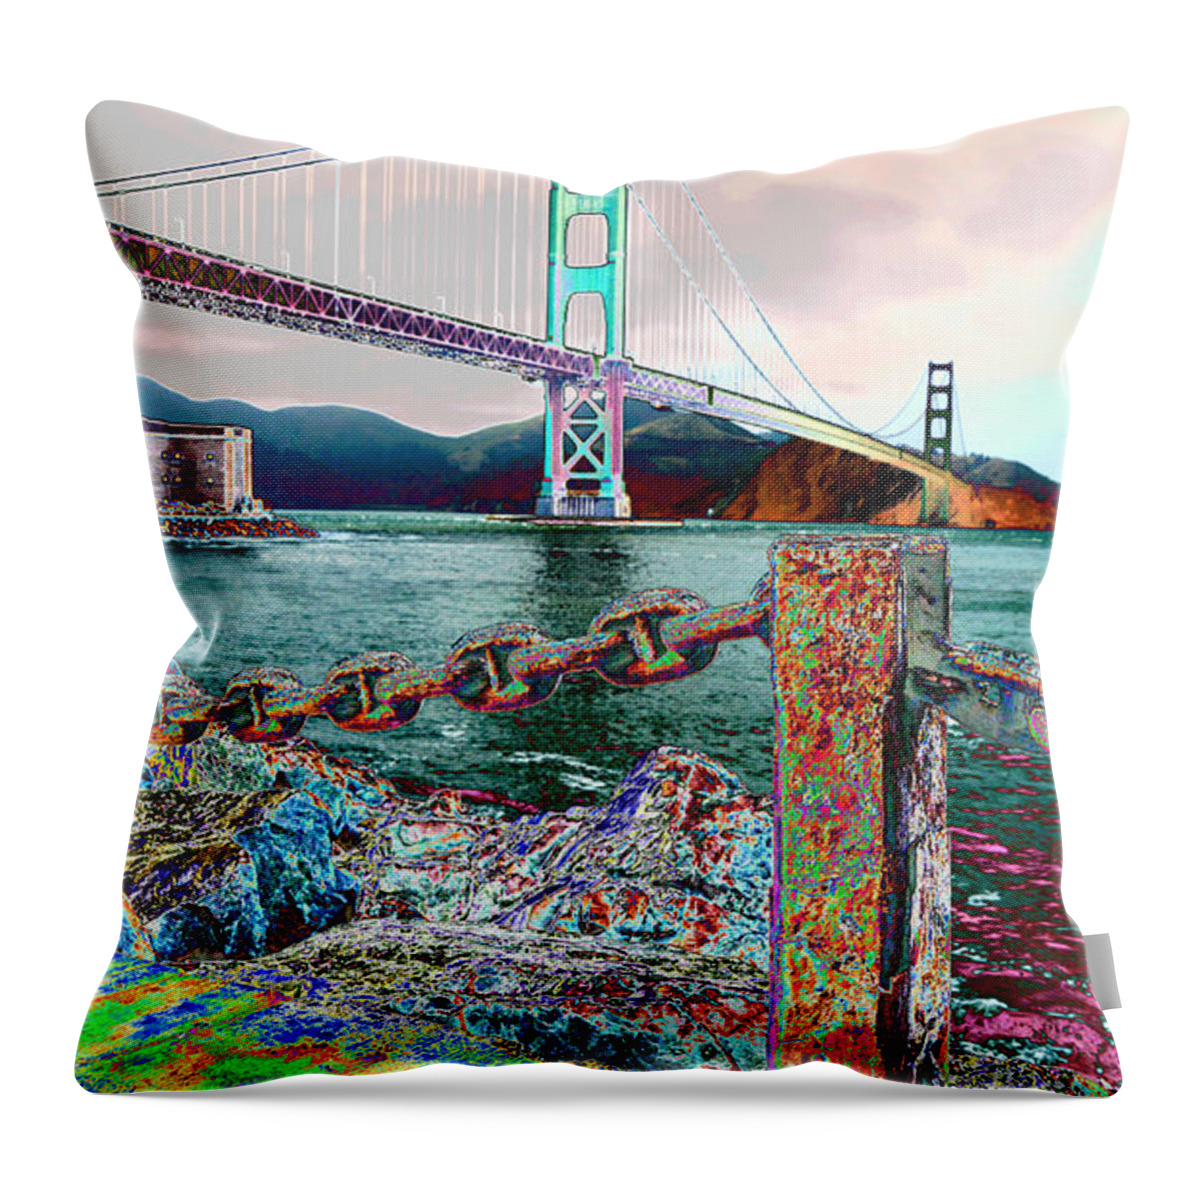 (shoreline) (rusty Color Chain) (bridge) (golden Gate Bridge)( San Francisco Bay) (bay Area Bridge) (california Bridge) Throw Pillow featuring the photograph Northward on the Bridge by Tom Kelly